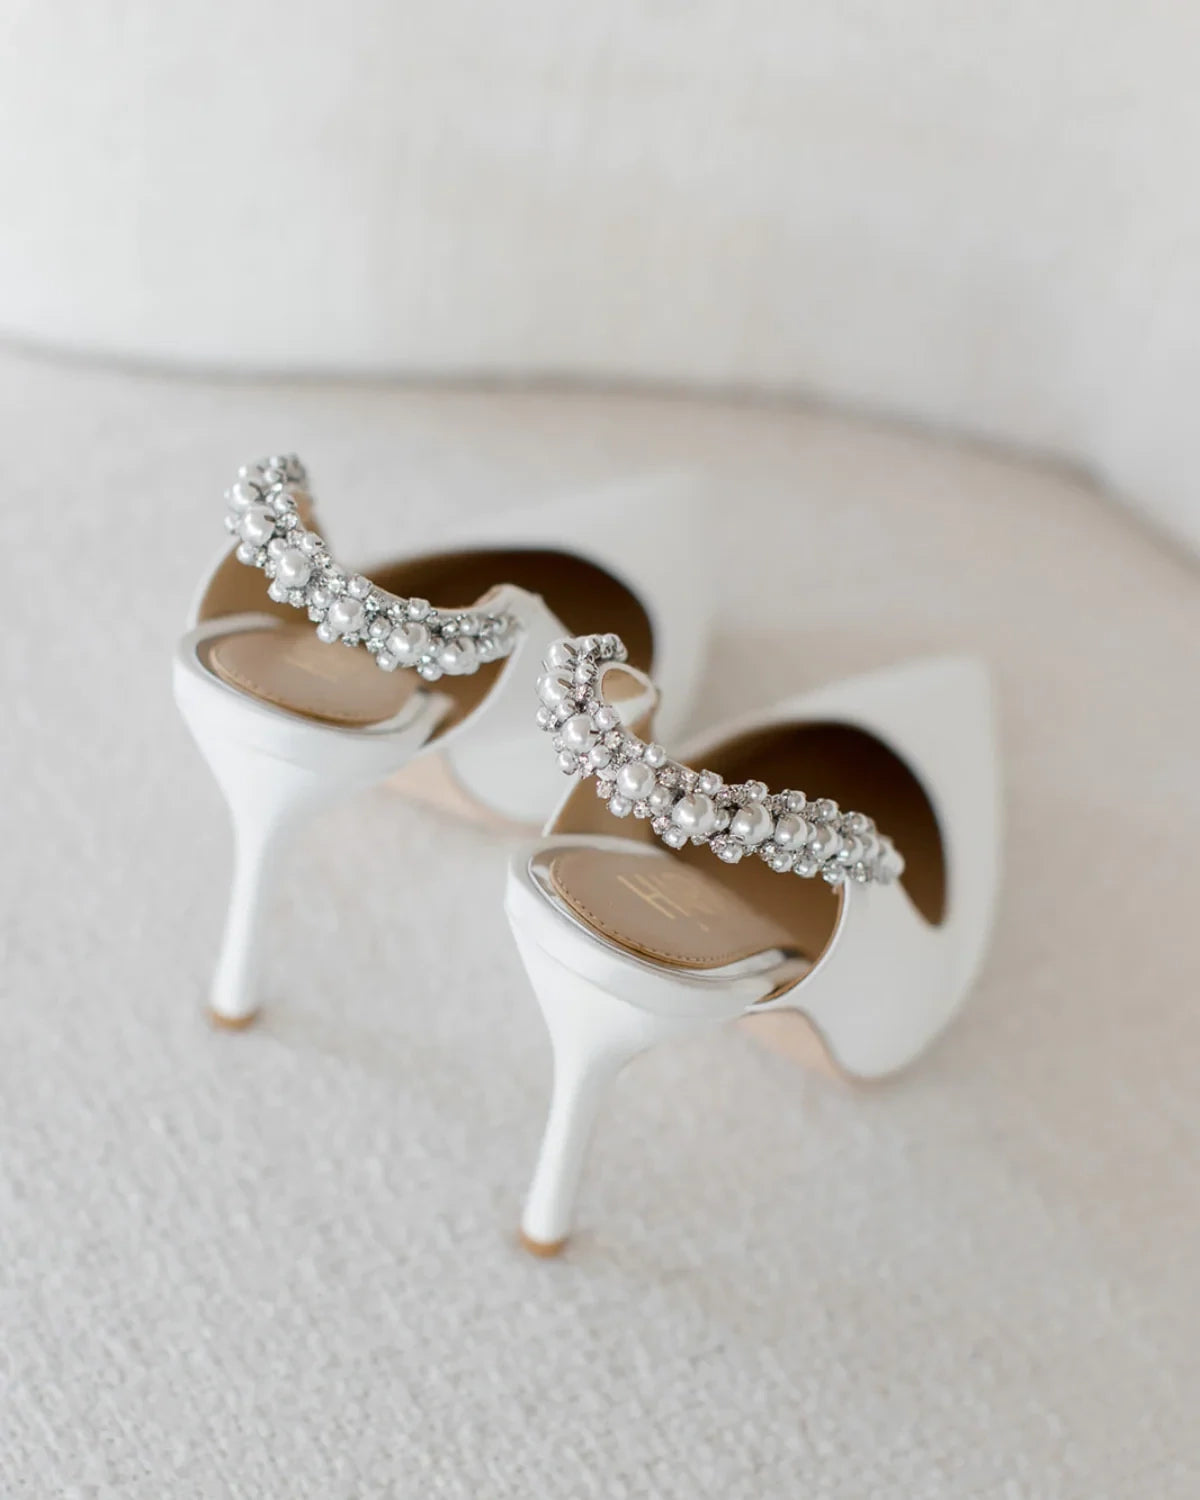 Bonnie Pearl - Soft White Pearl & Crystal Embellished Sling Back Bridal Pump